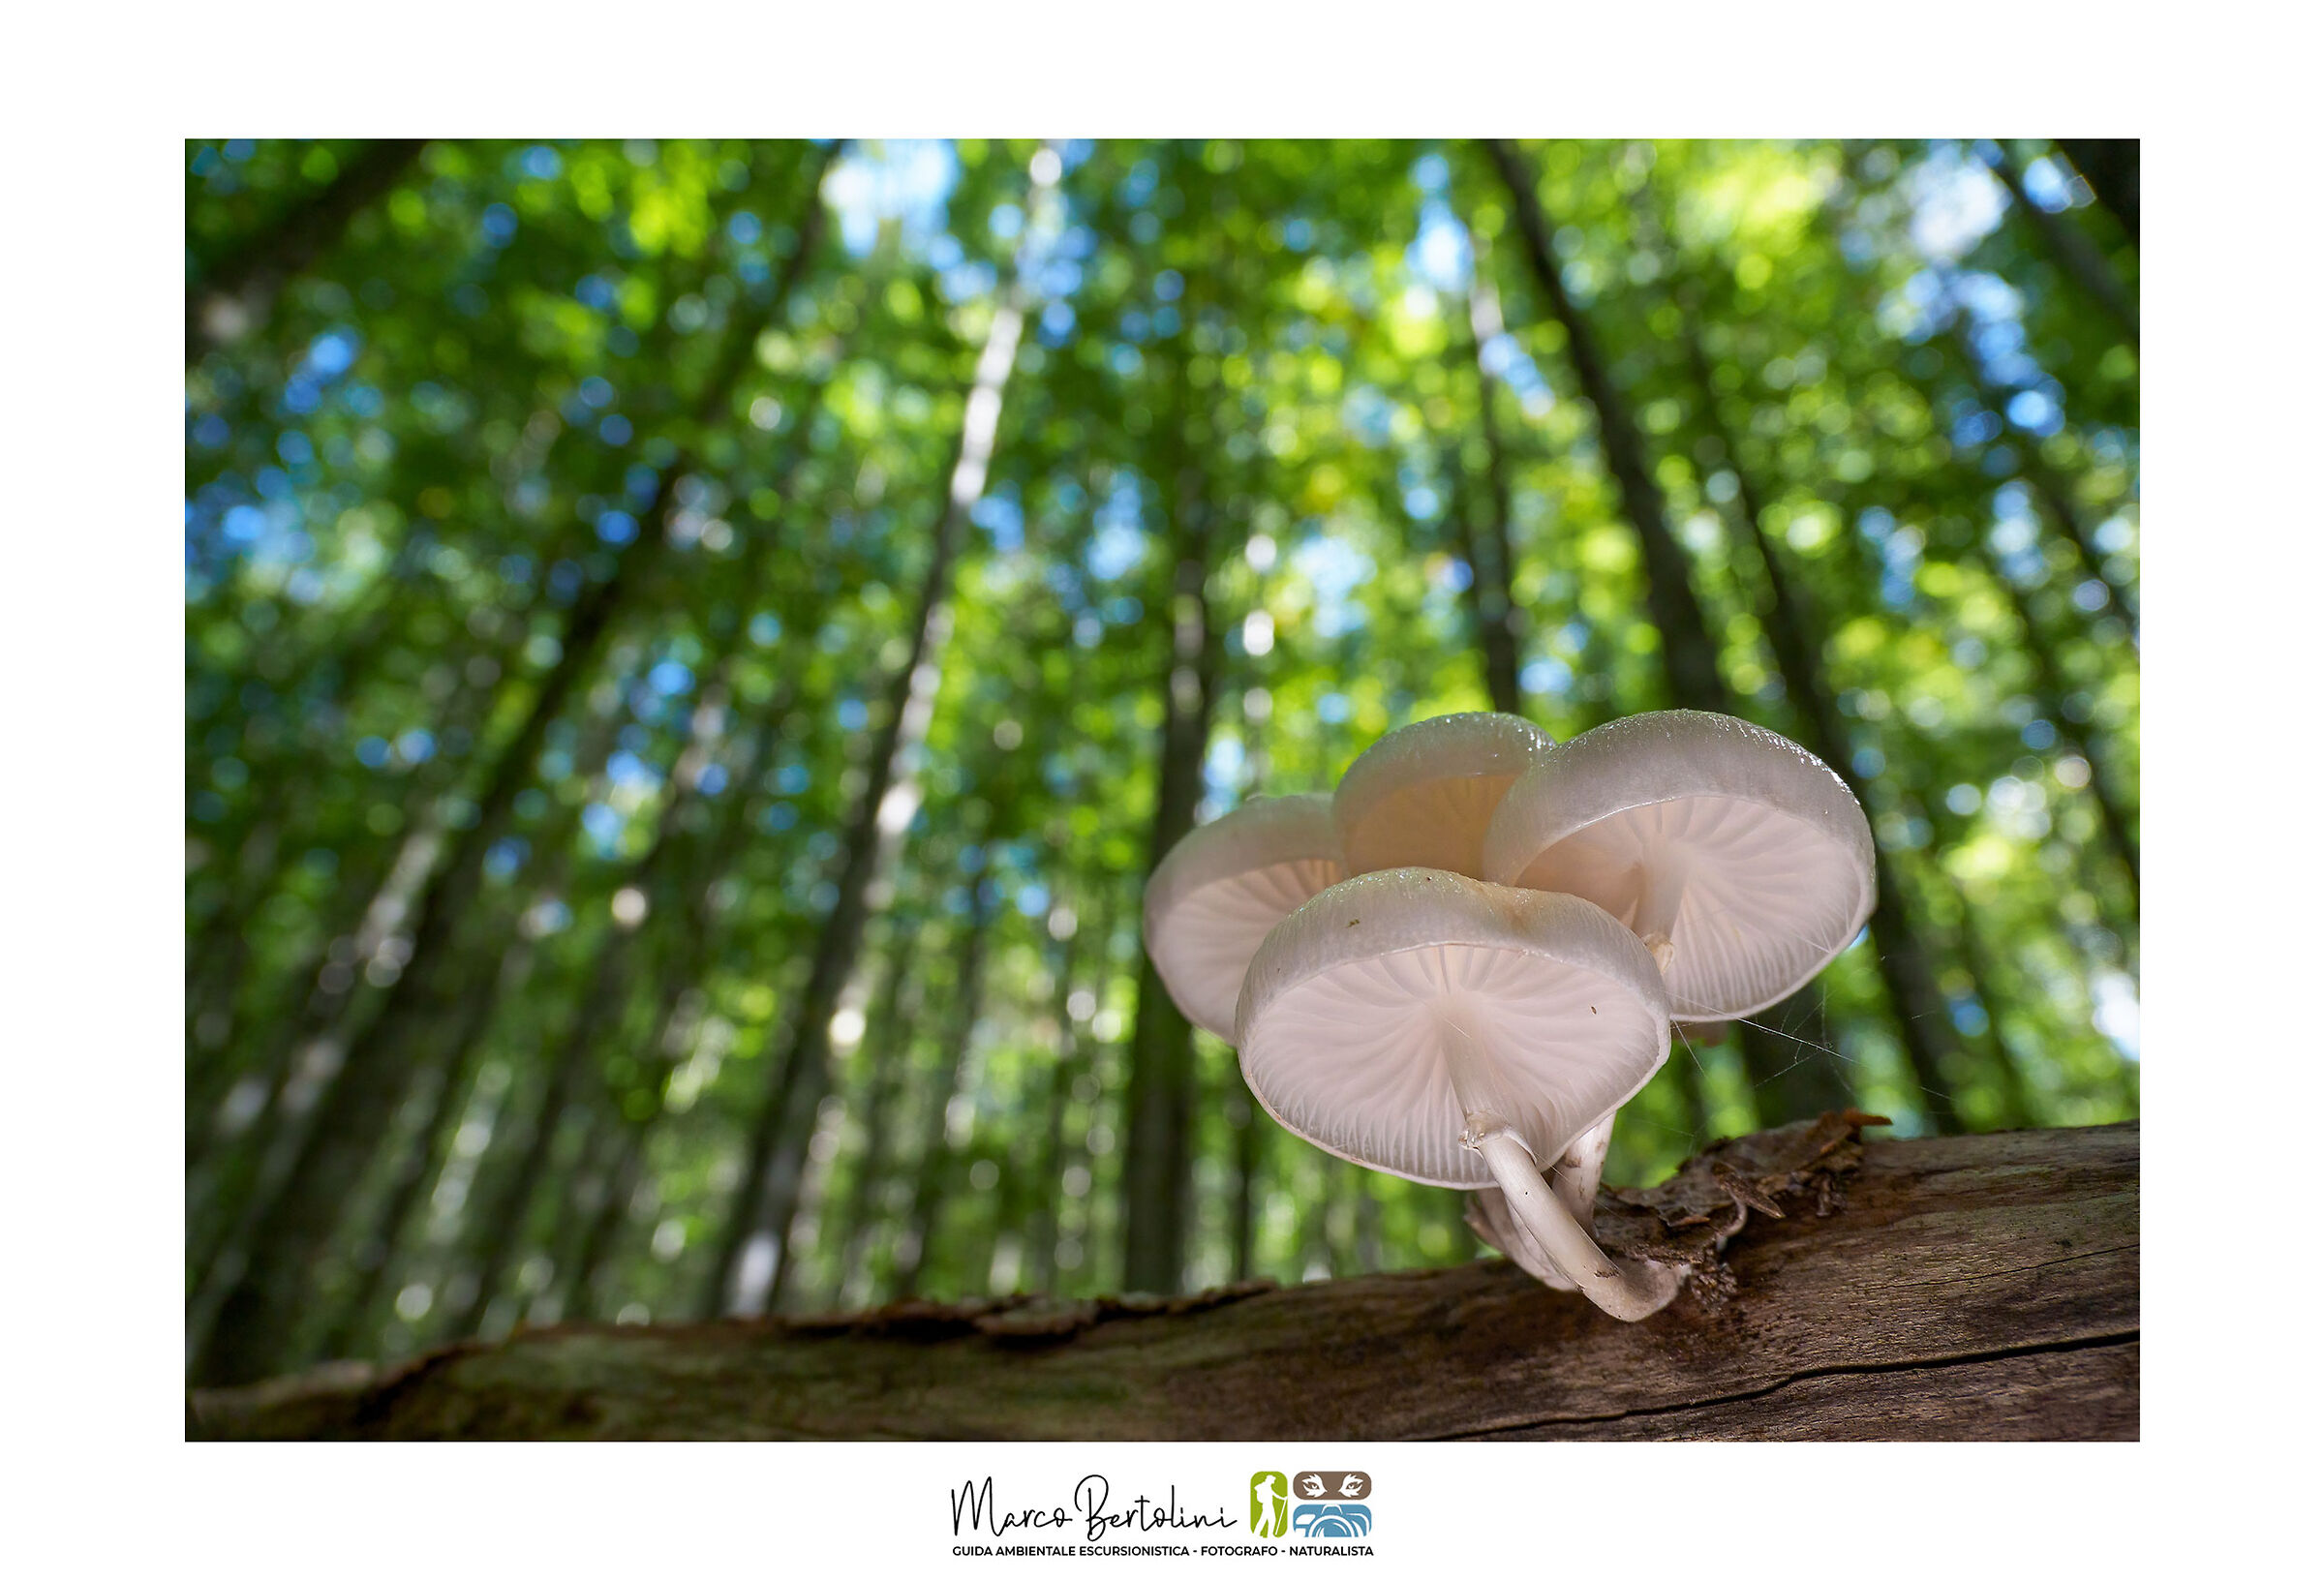 Porcelain mushrooms...